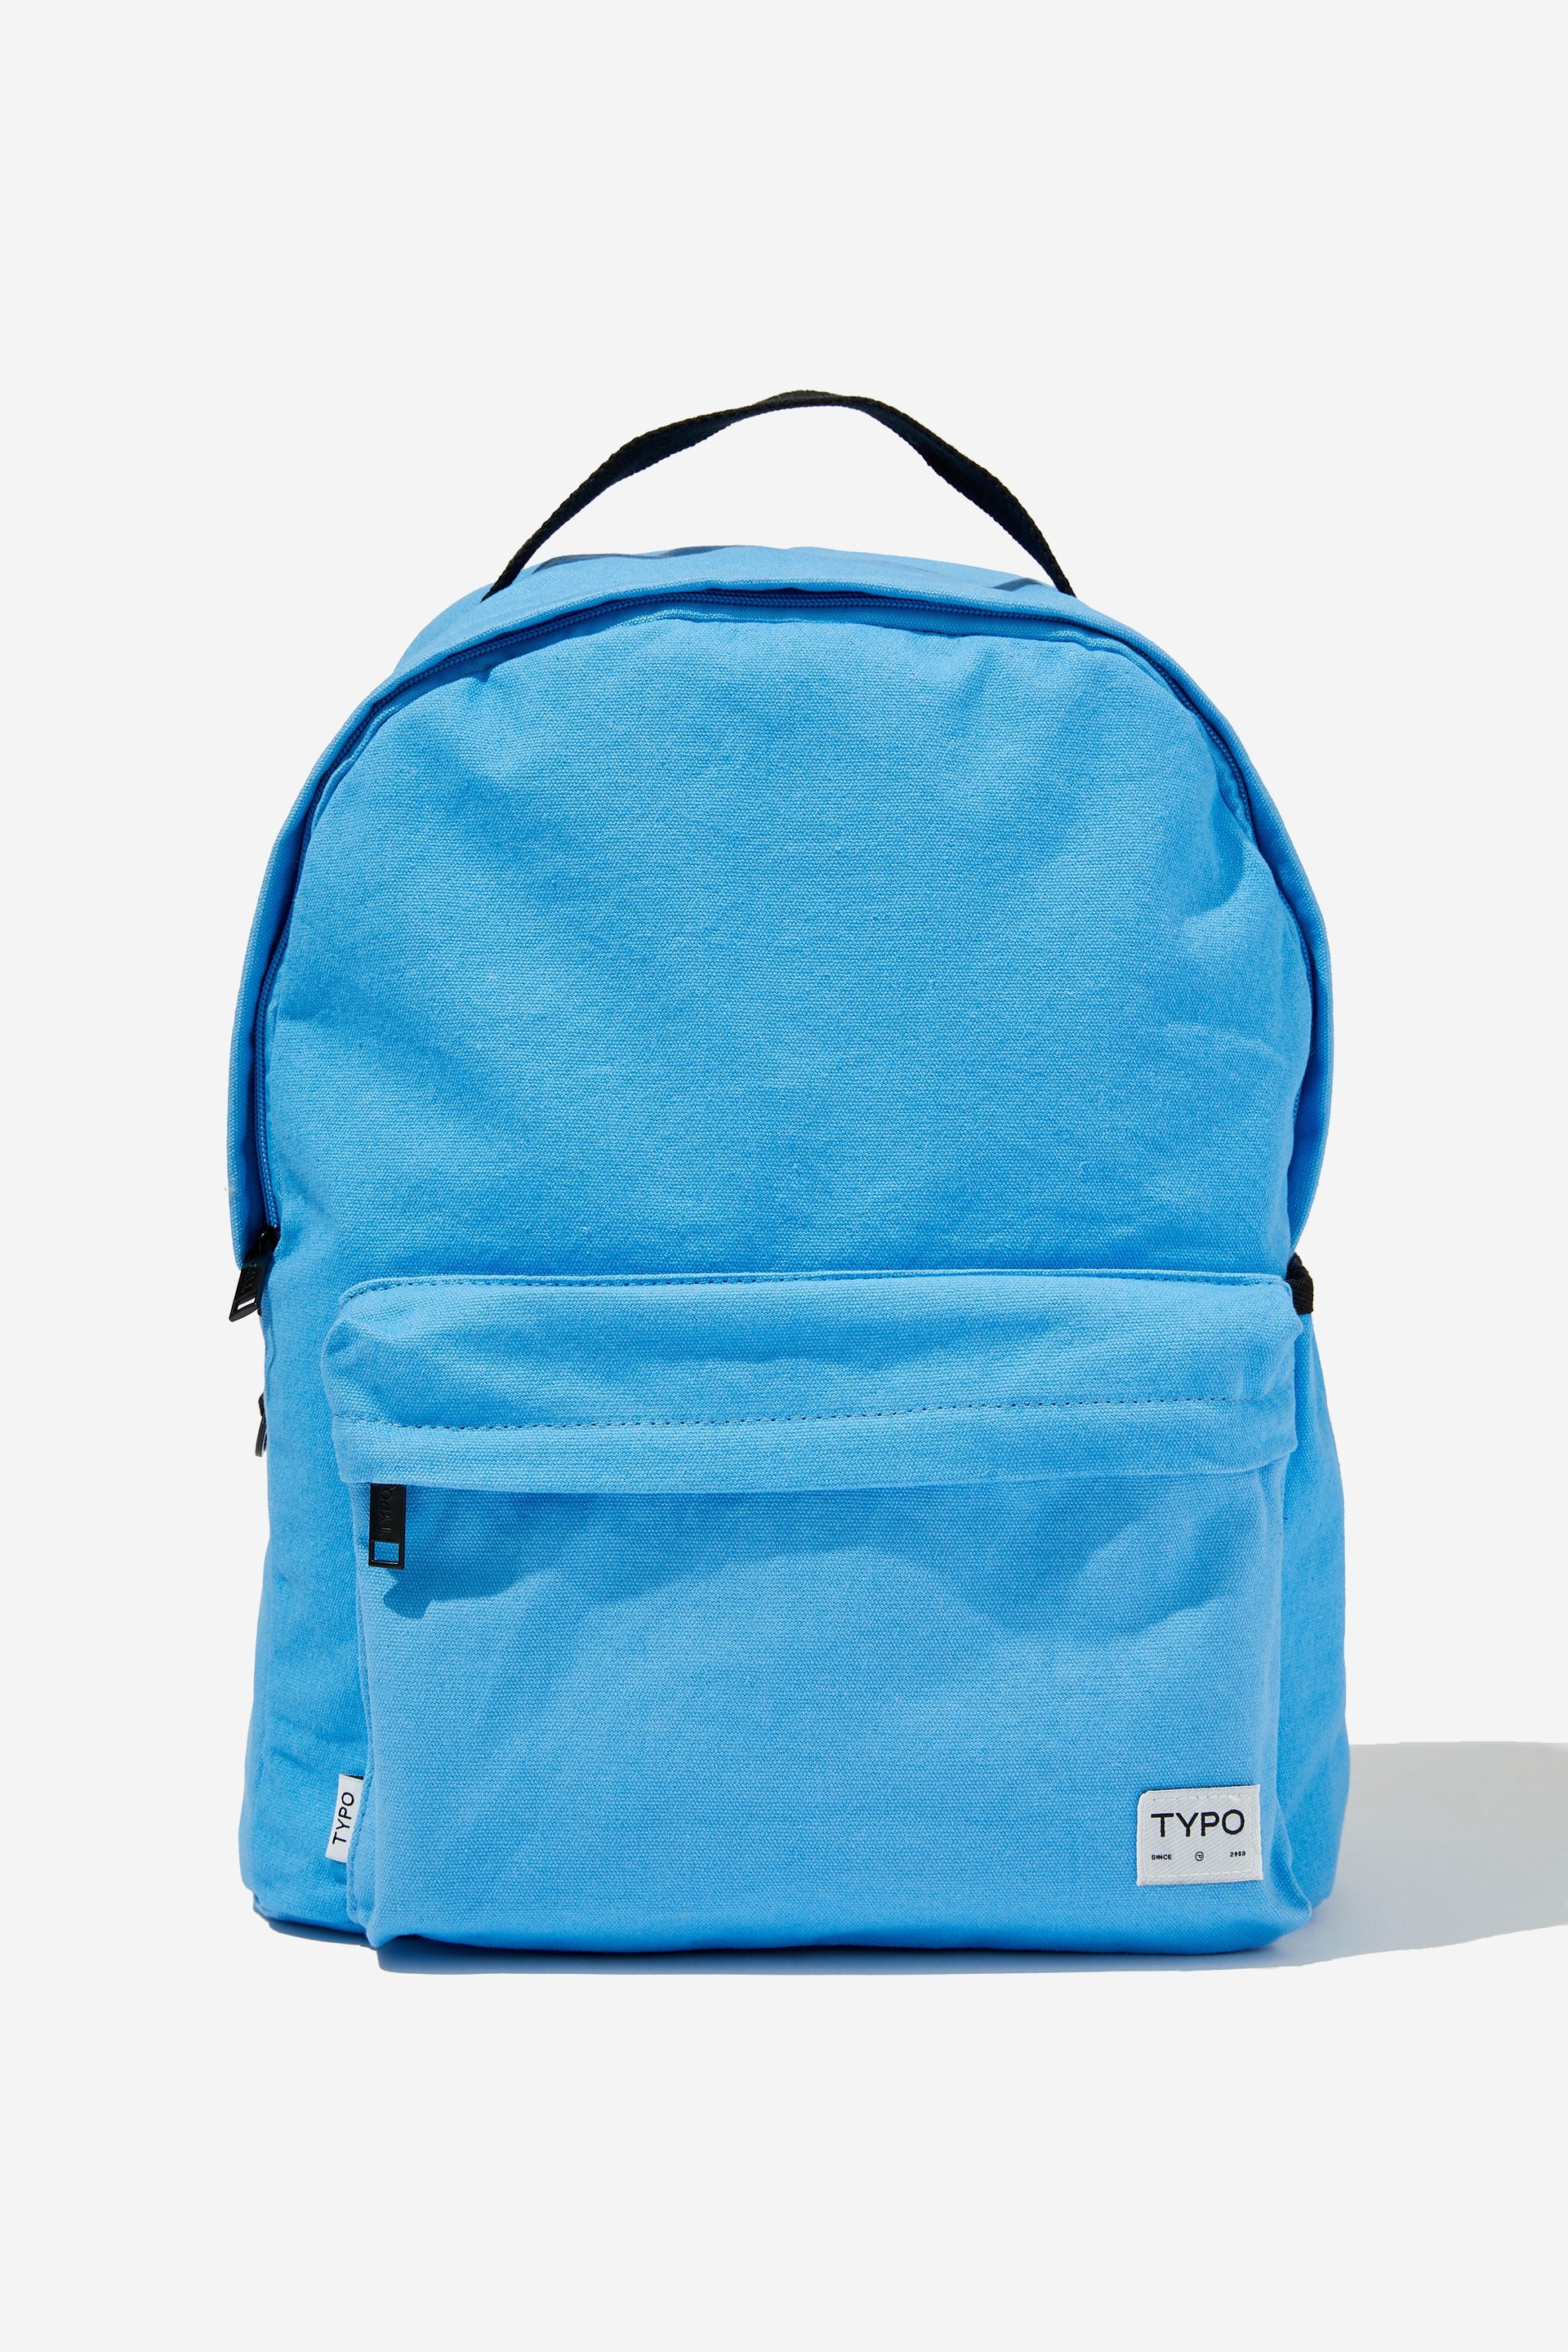 Typo - Alumni Backpack - Cornflour blue